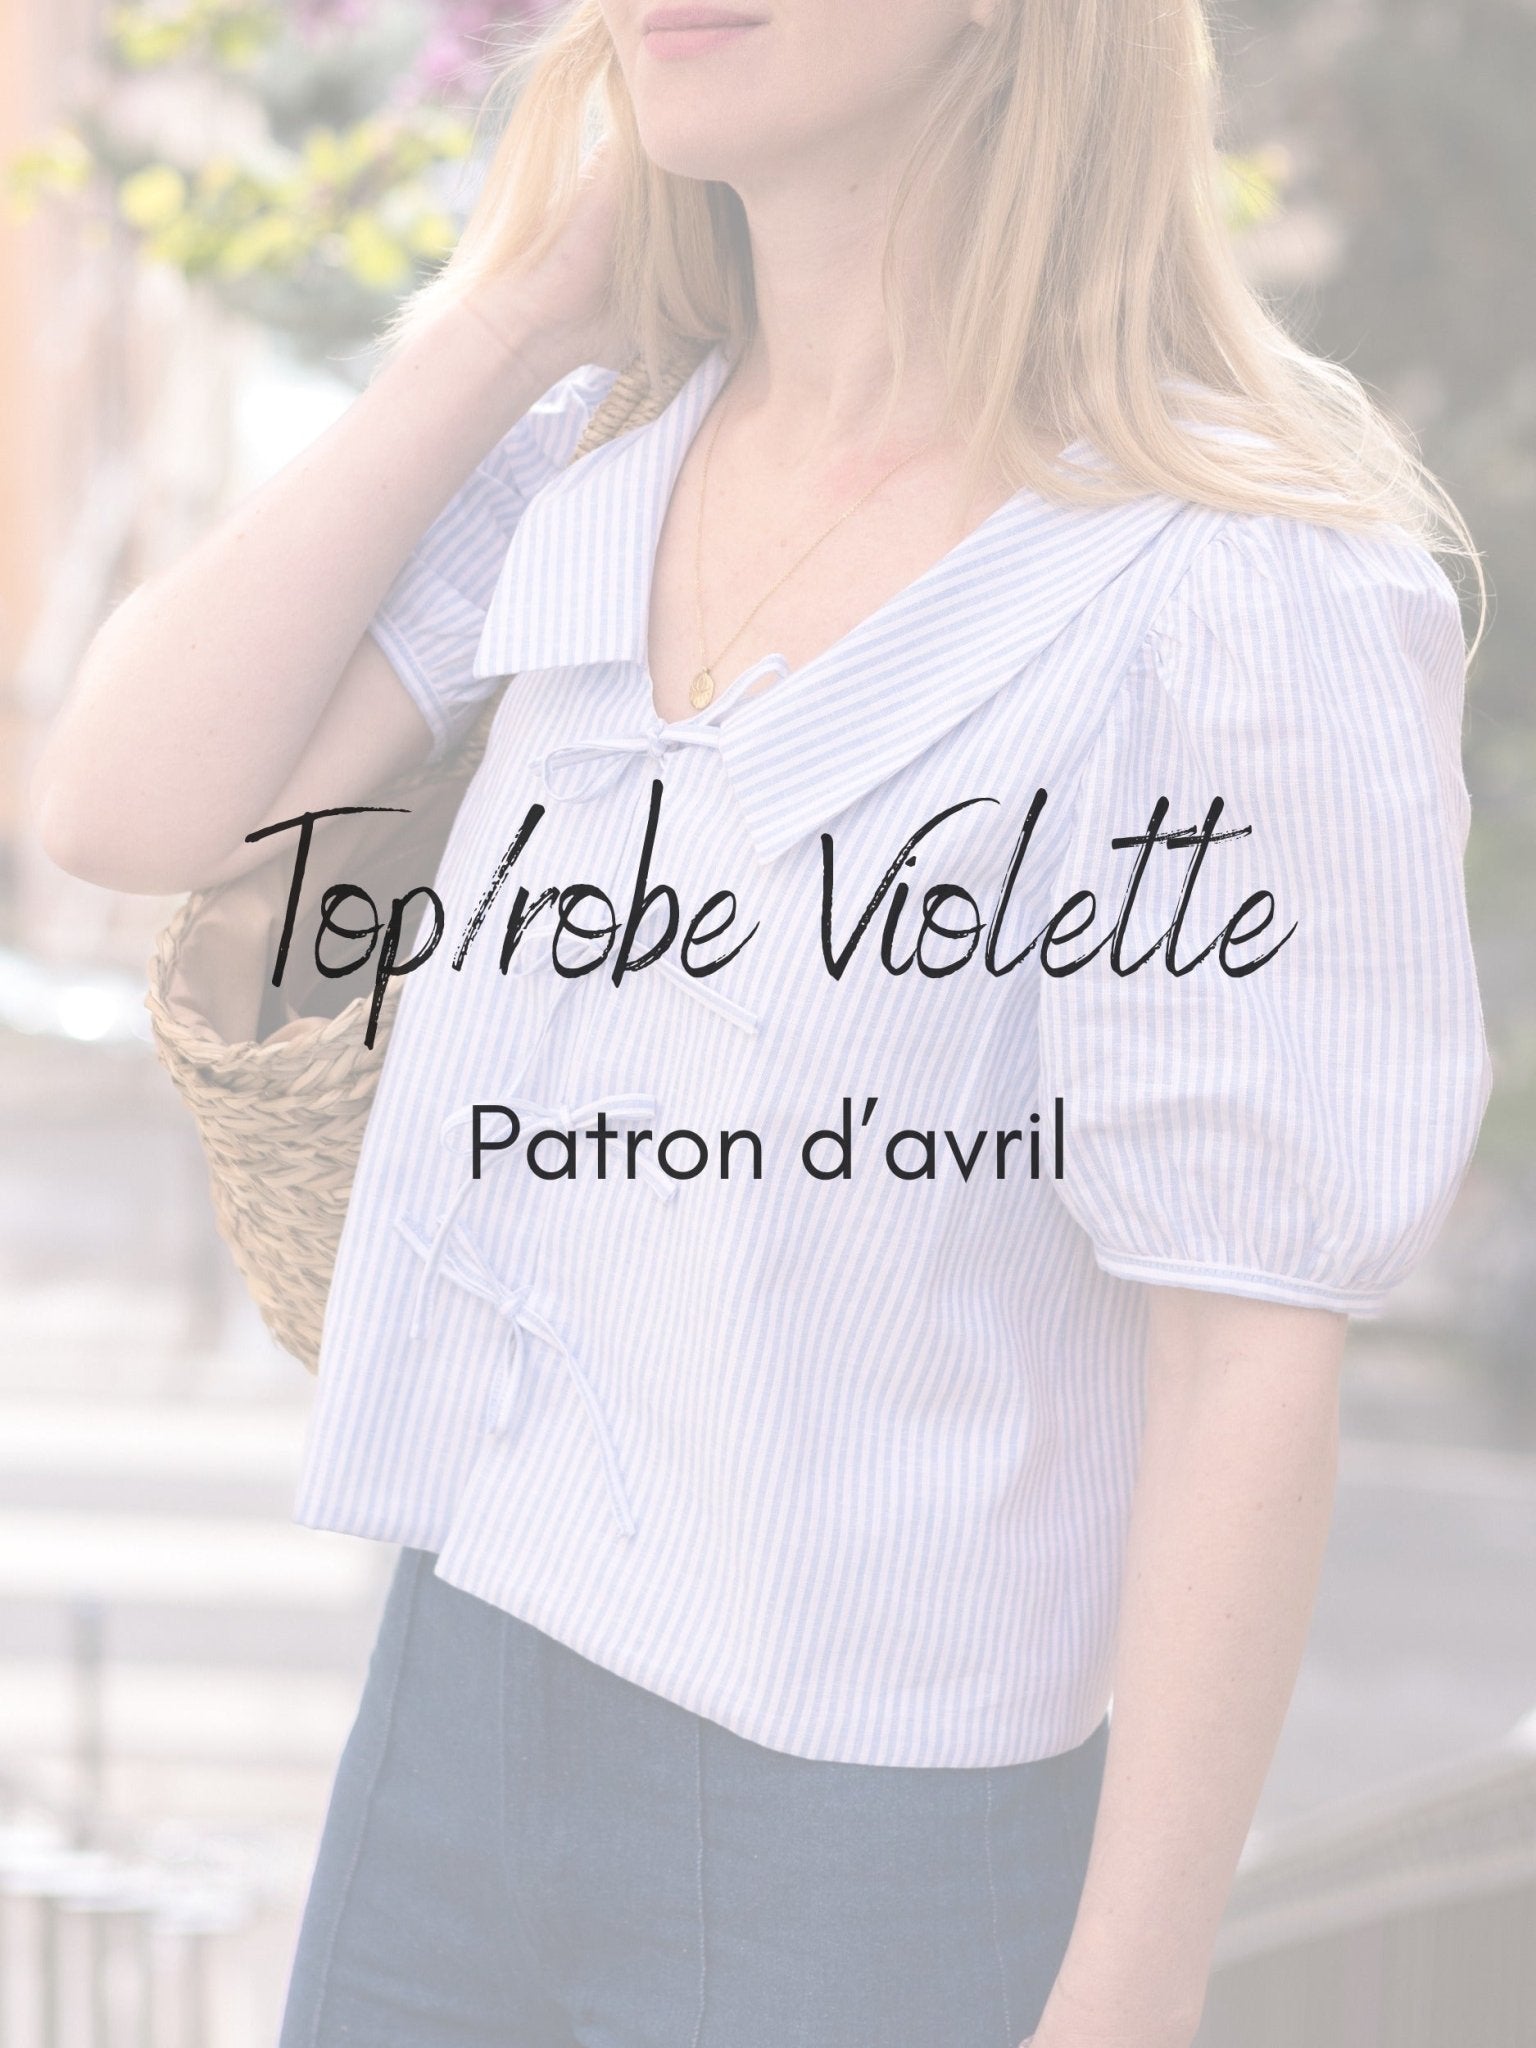 Top/Robe Violette - Patron Couture PDF - Joli Lab